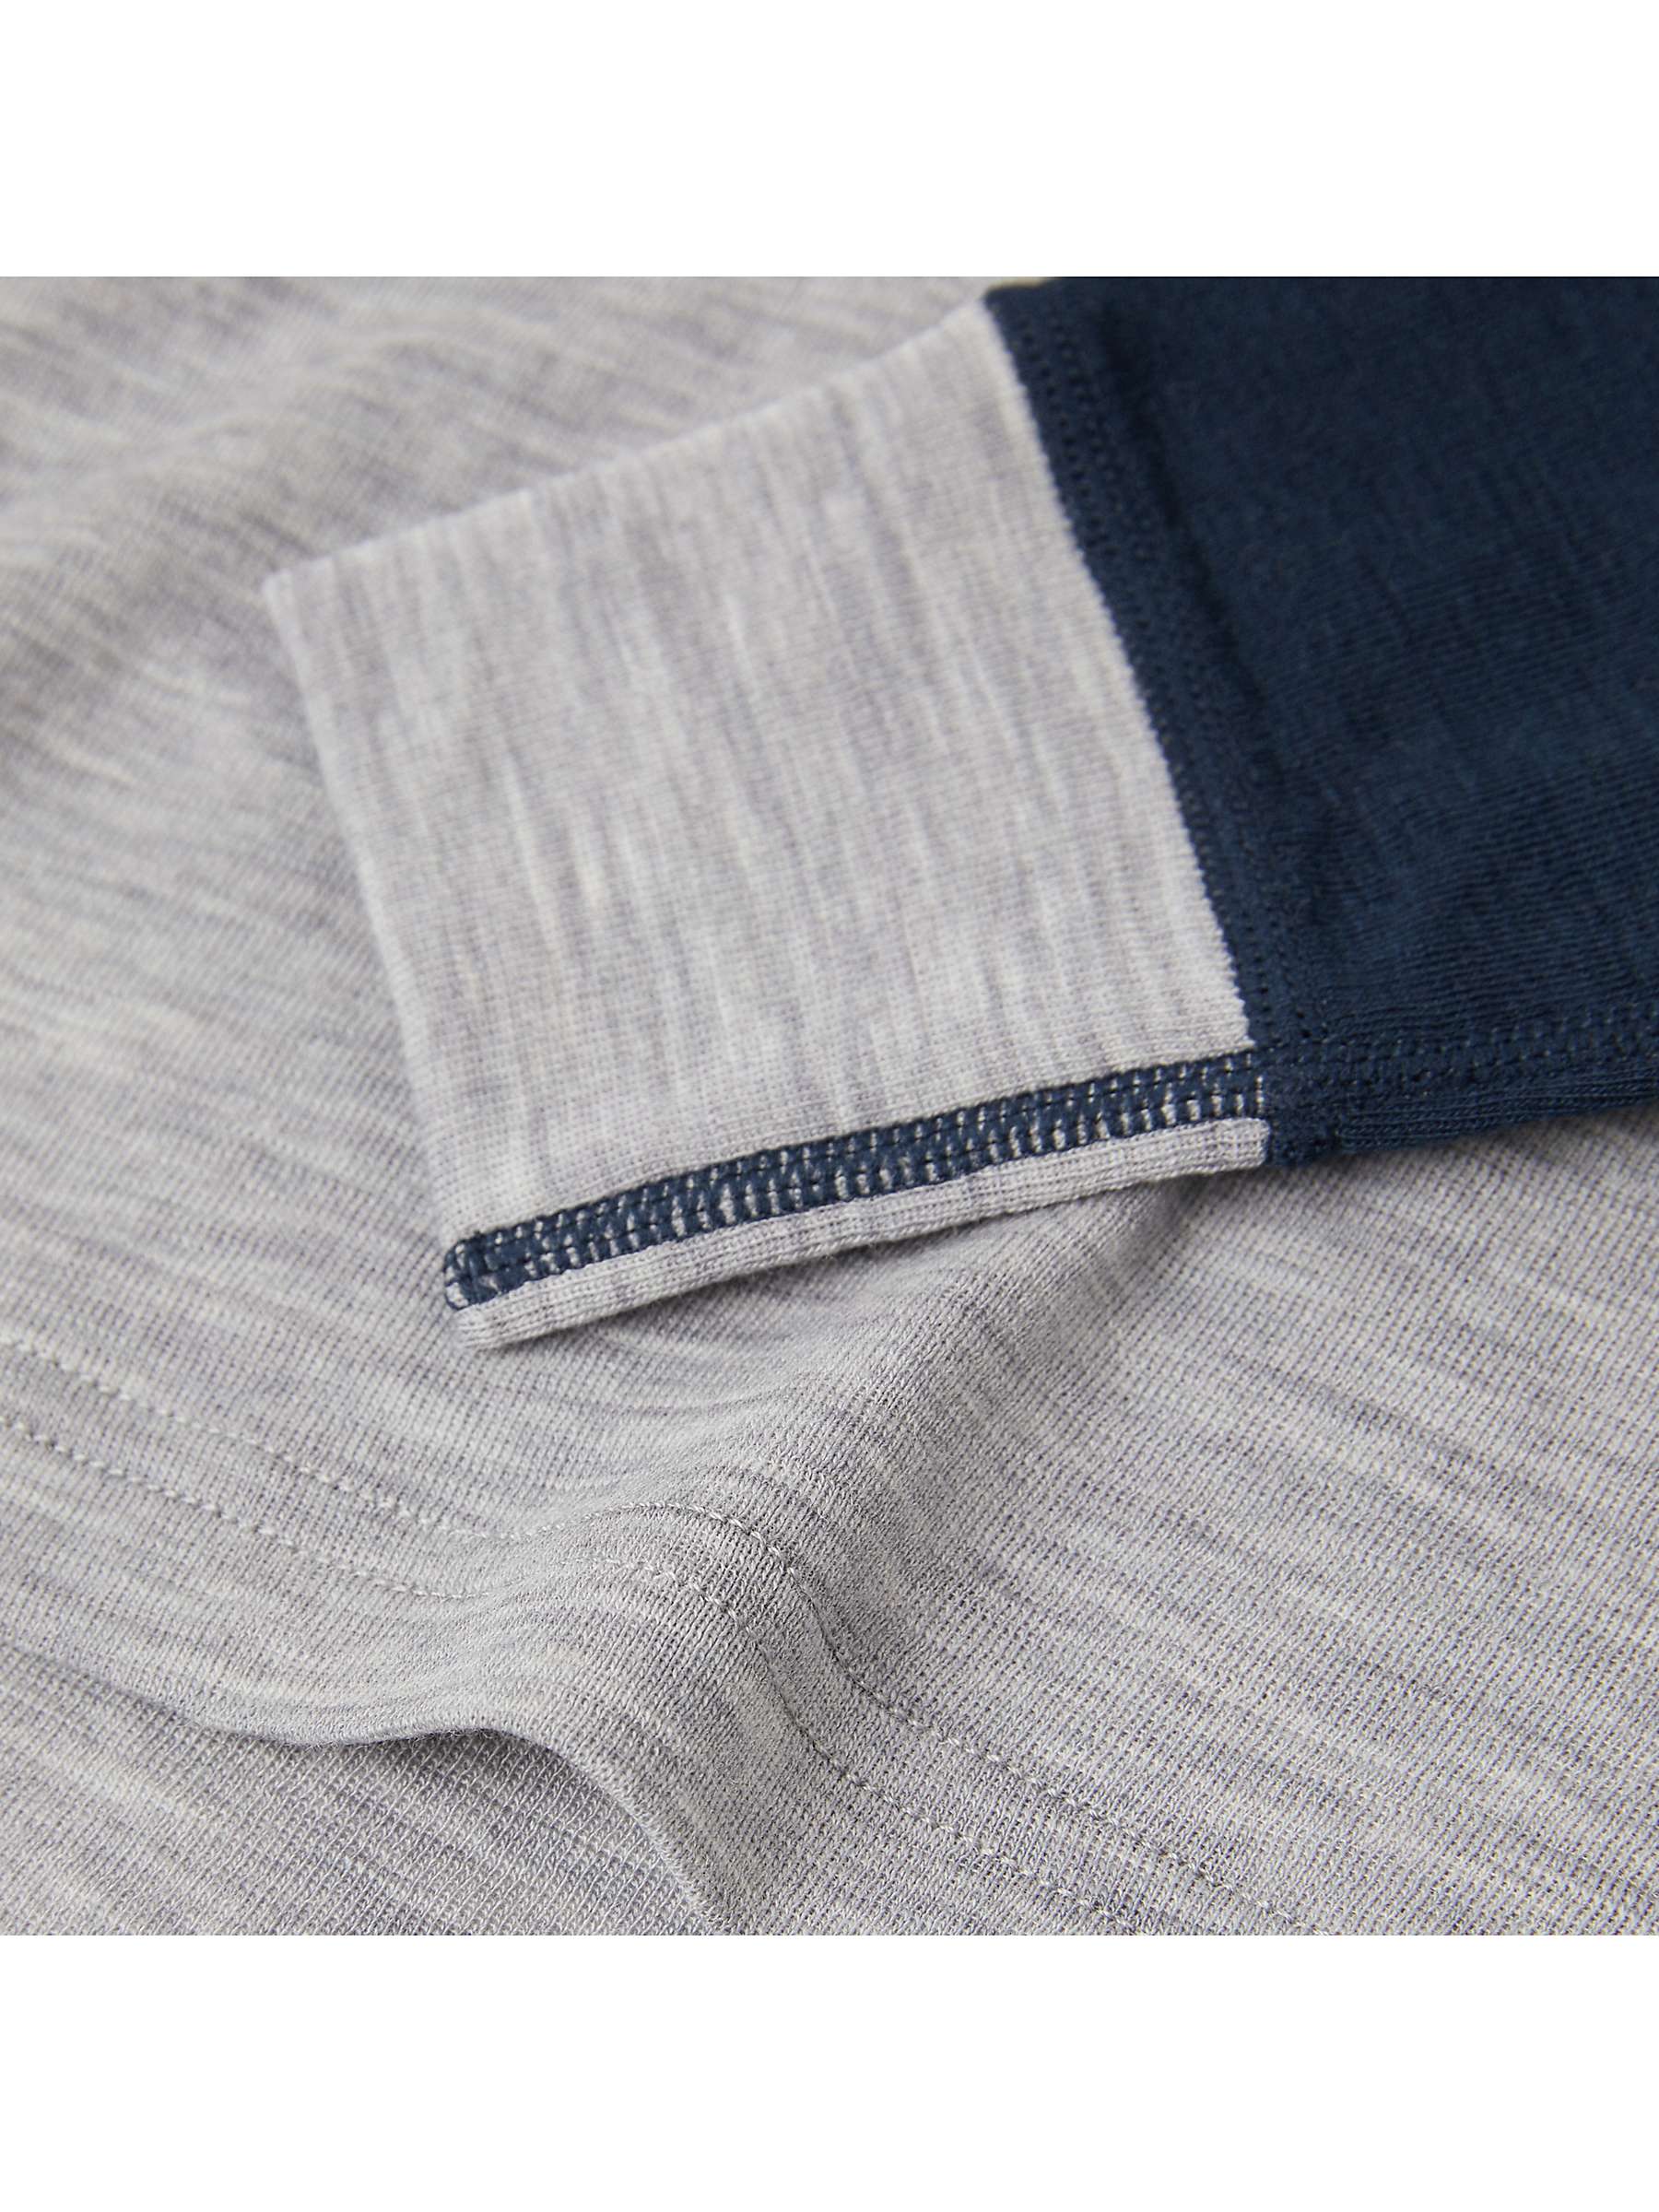 Buy Polarn O. Pyret Kids' Thermal Fine Knit Merino Wool Top, Blue/Grey Online at johnlewis.com